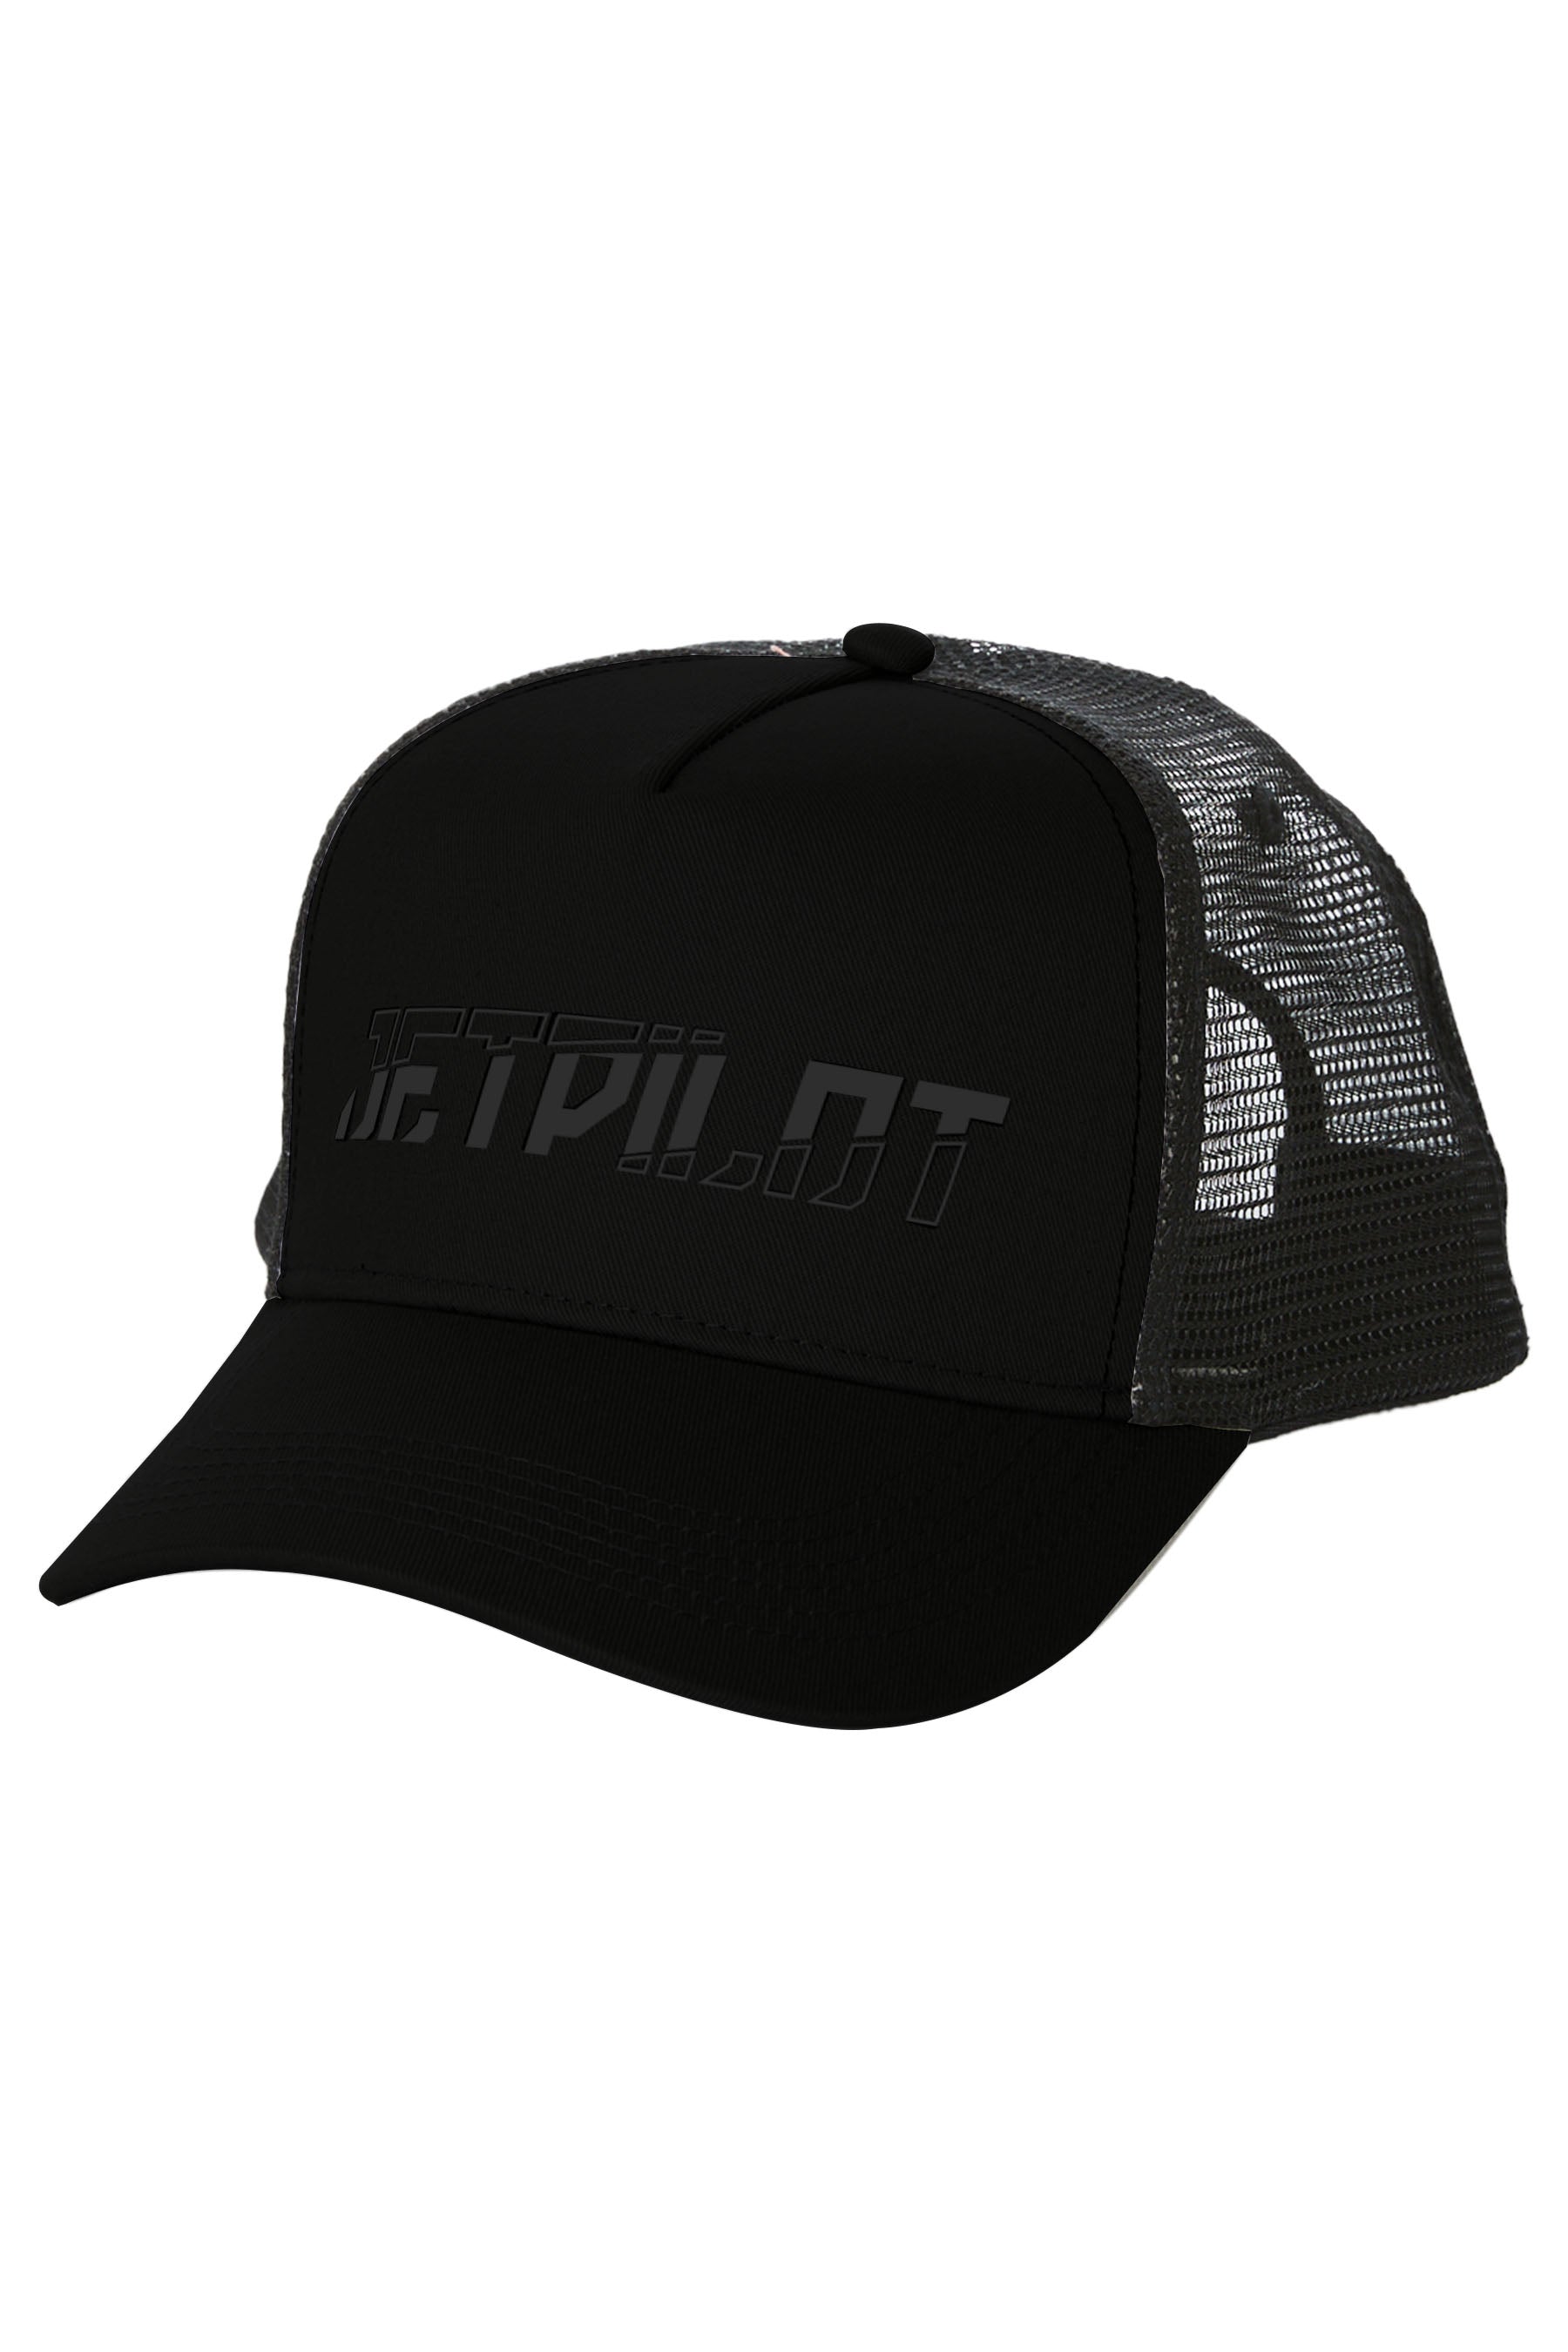 Jetpilot Super Splice Mens Trucker Cap - Black/Black